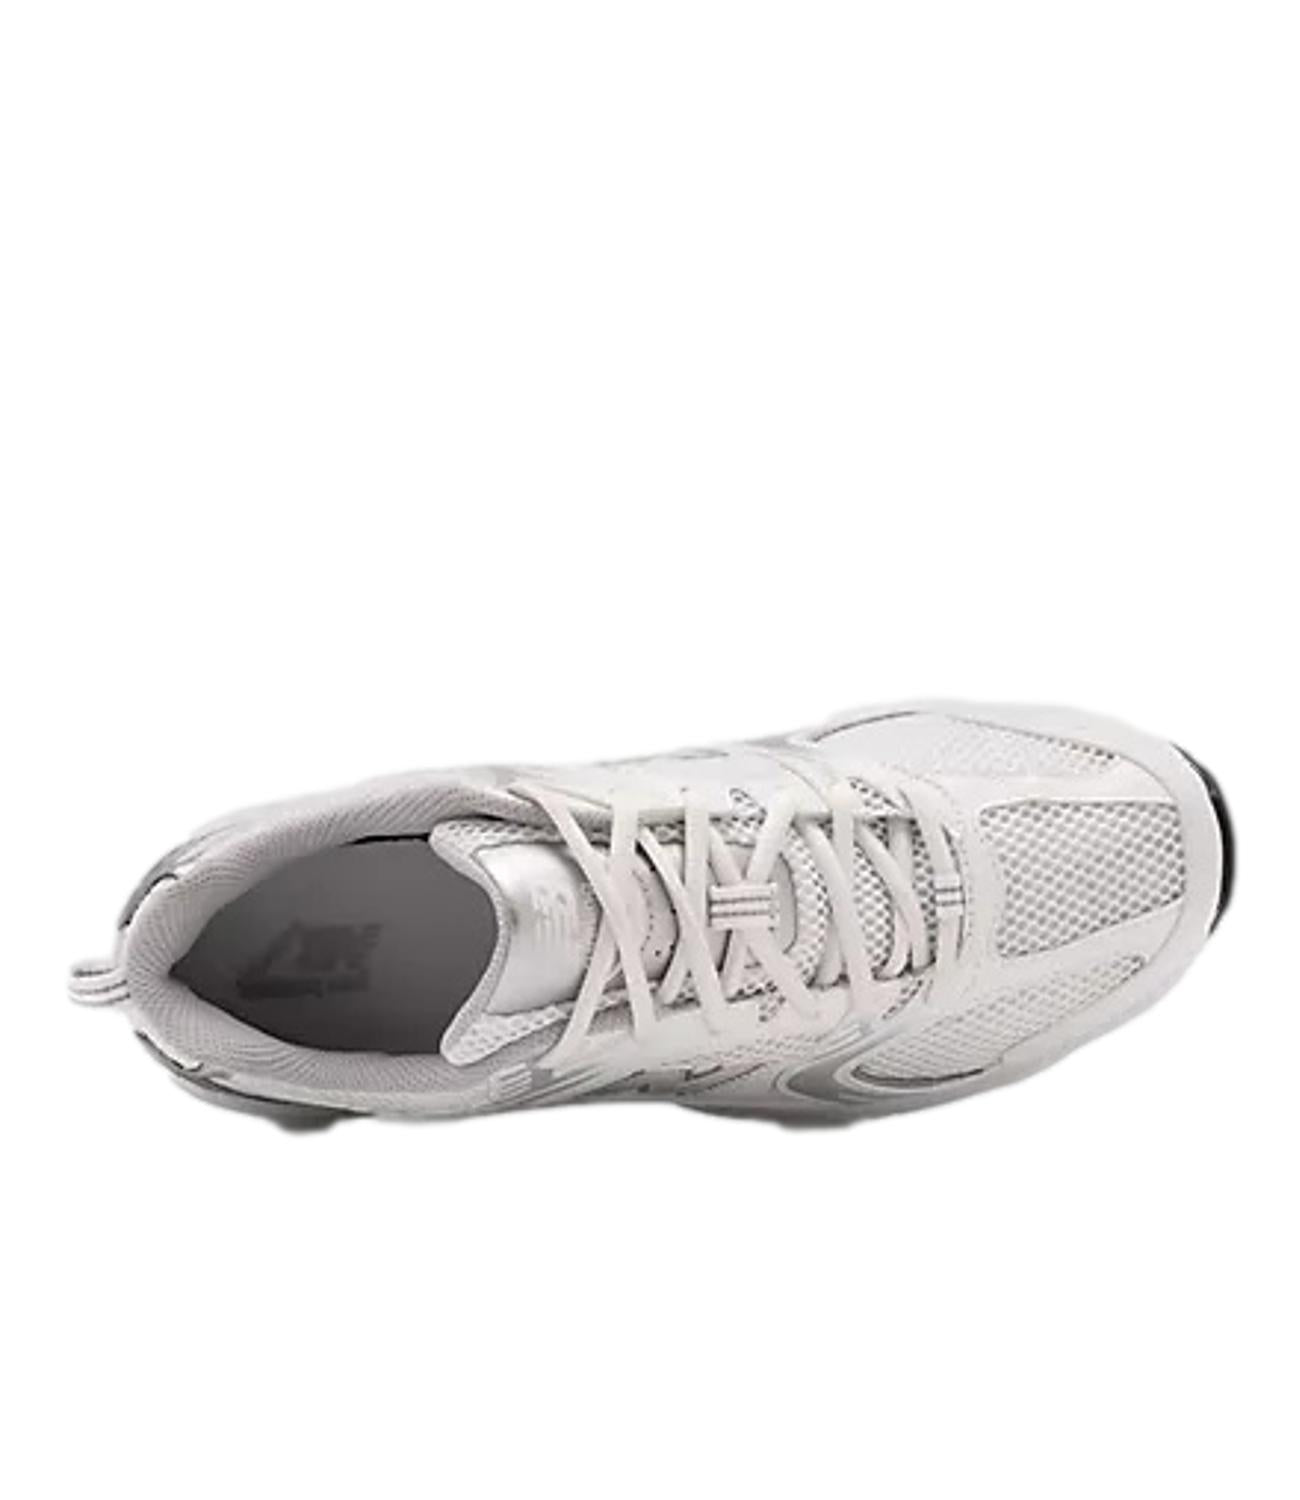 NEW BALANCE 530 Sneakers bianca e grigio argento